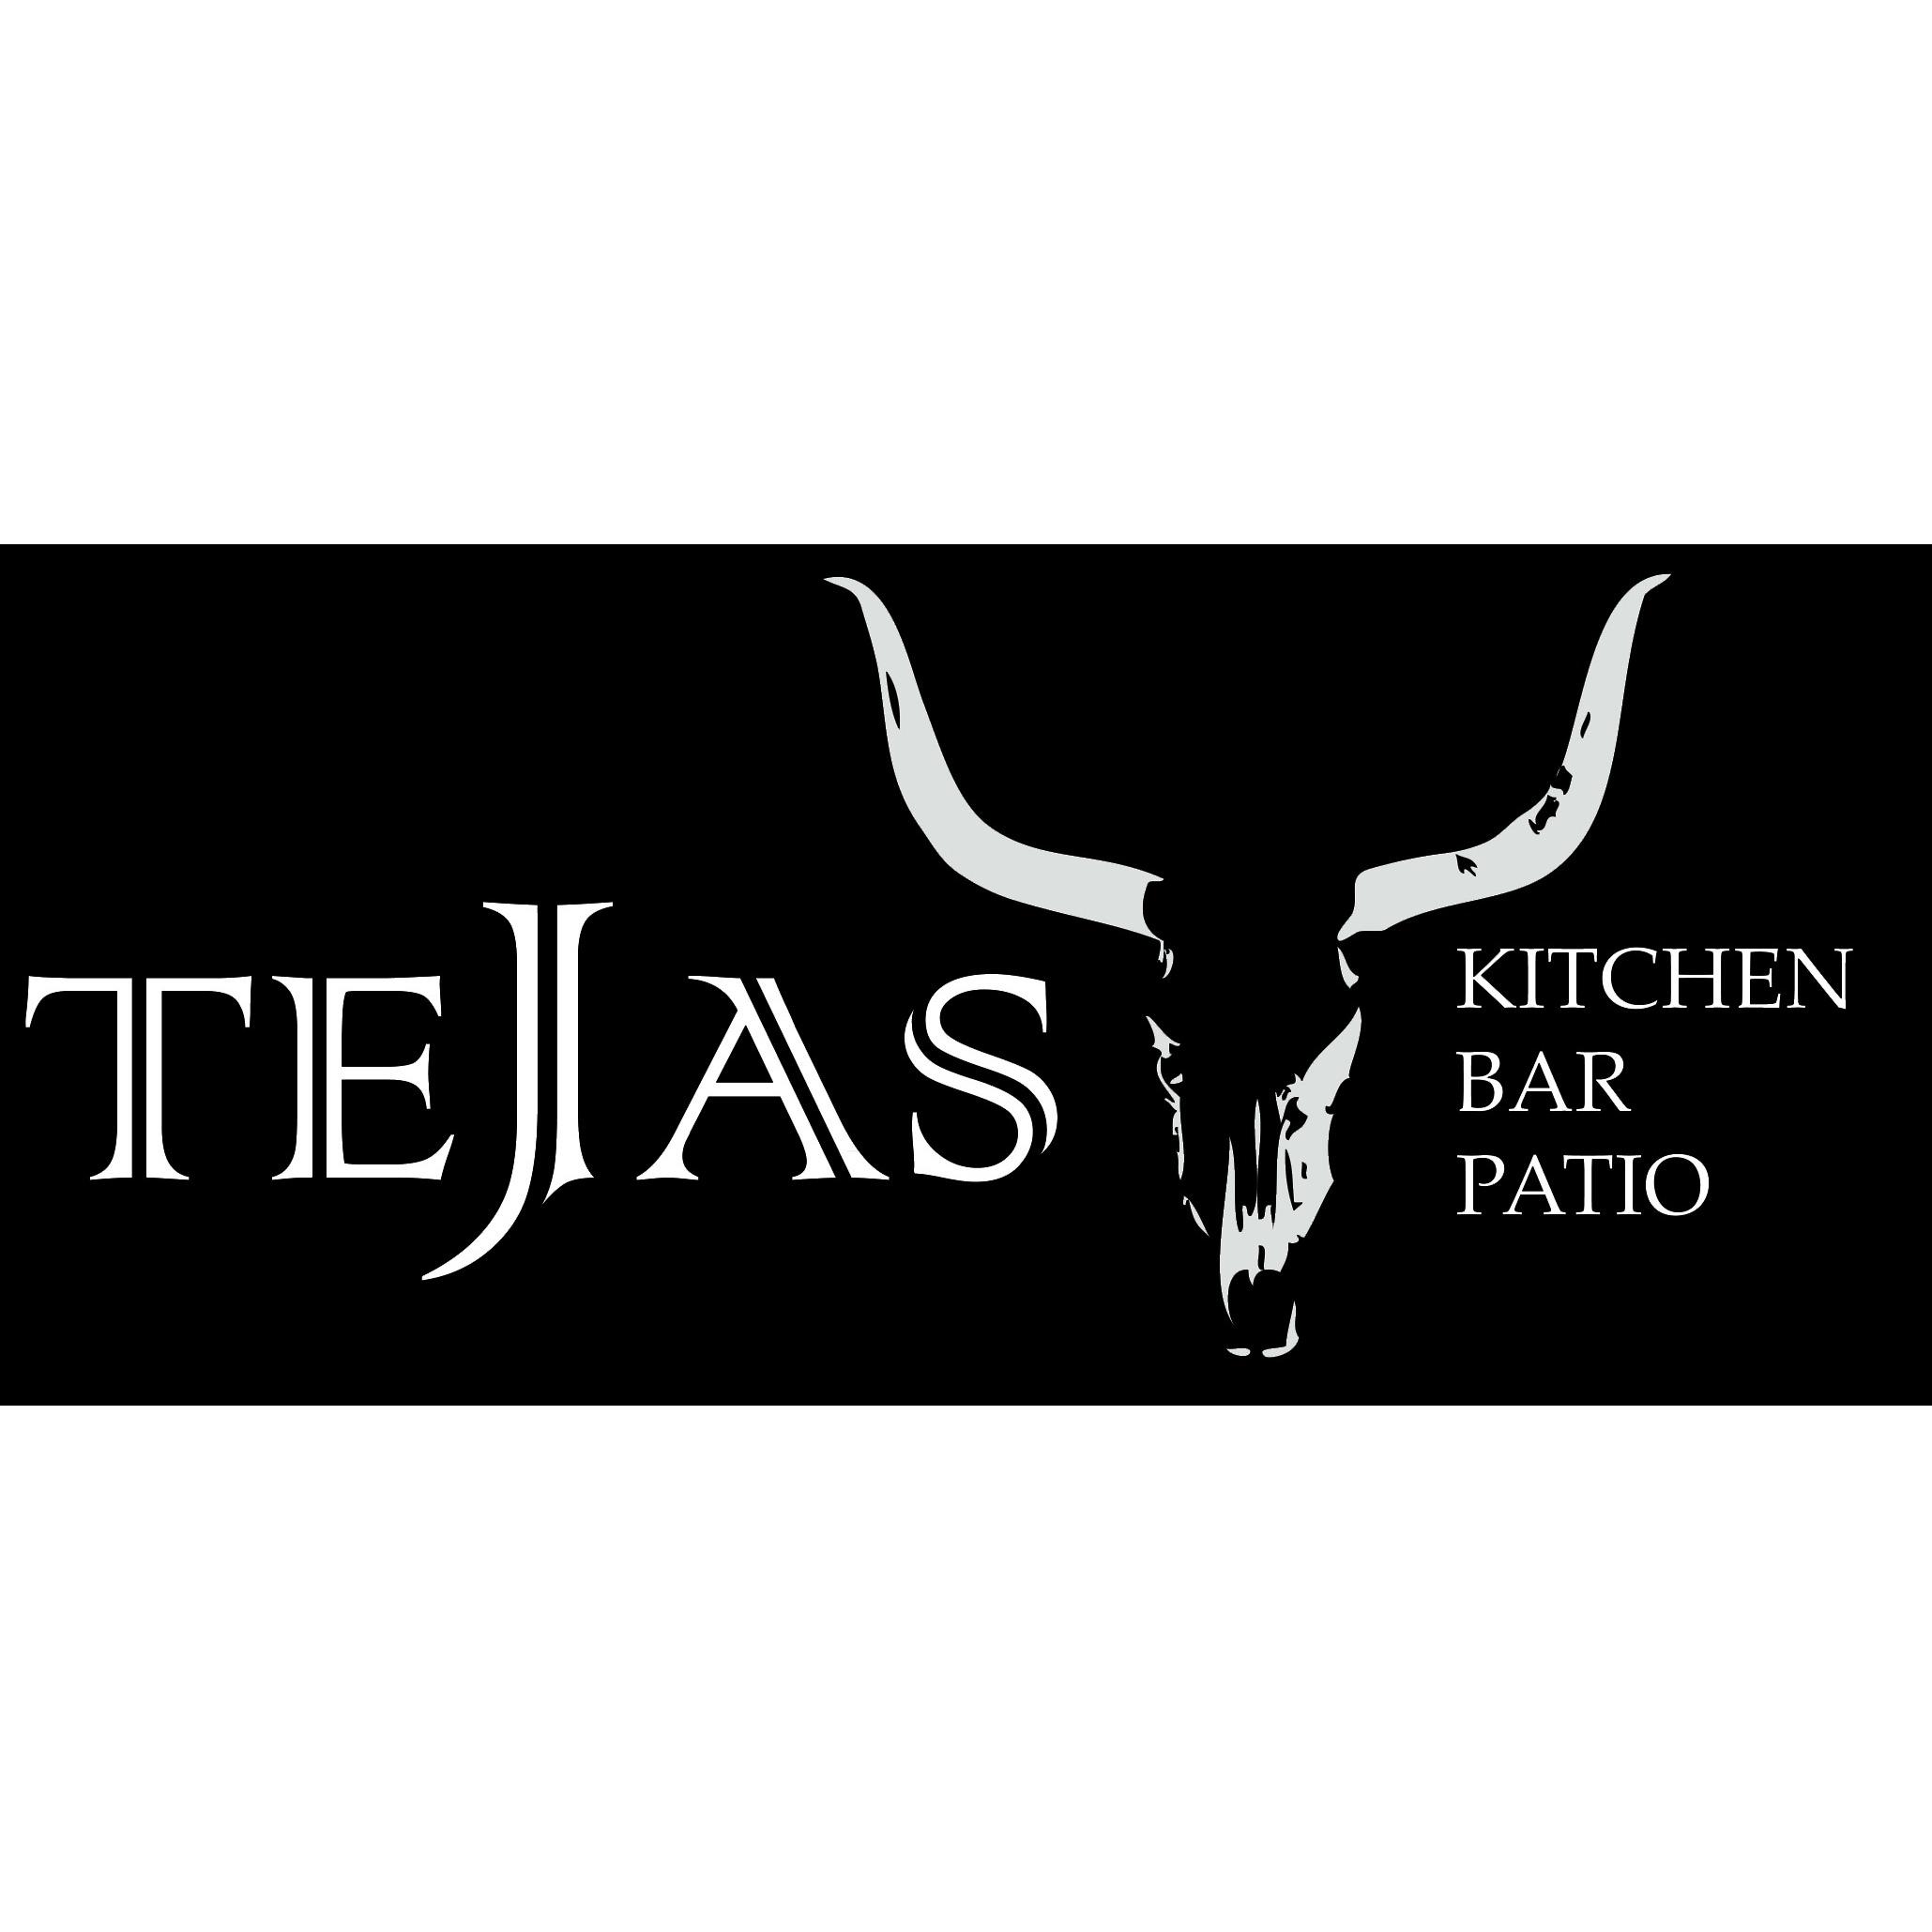 Tejas Kitchen Bar Patio